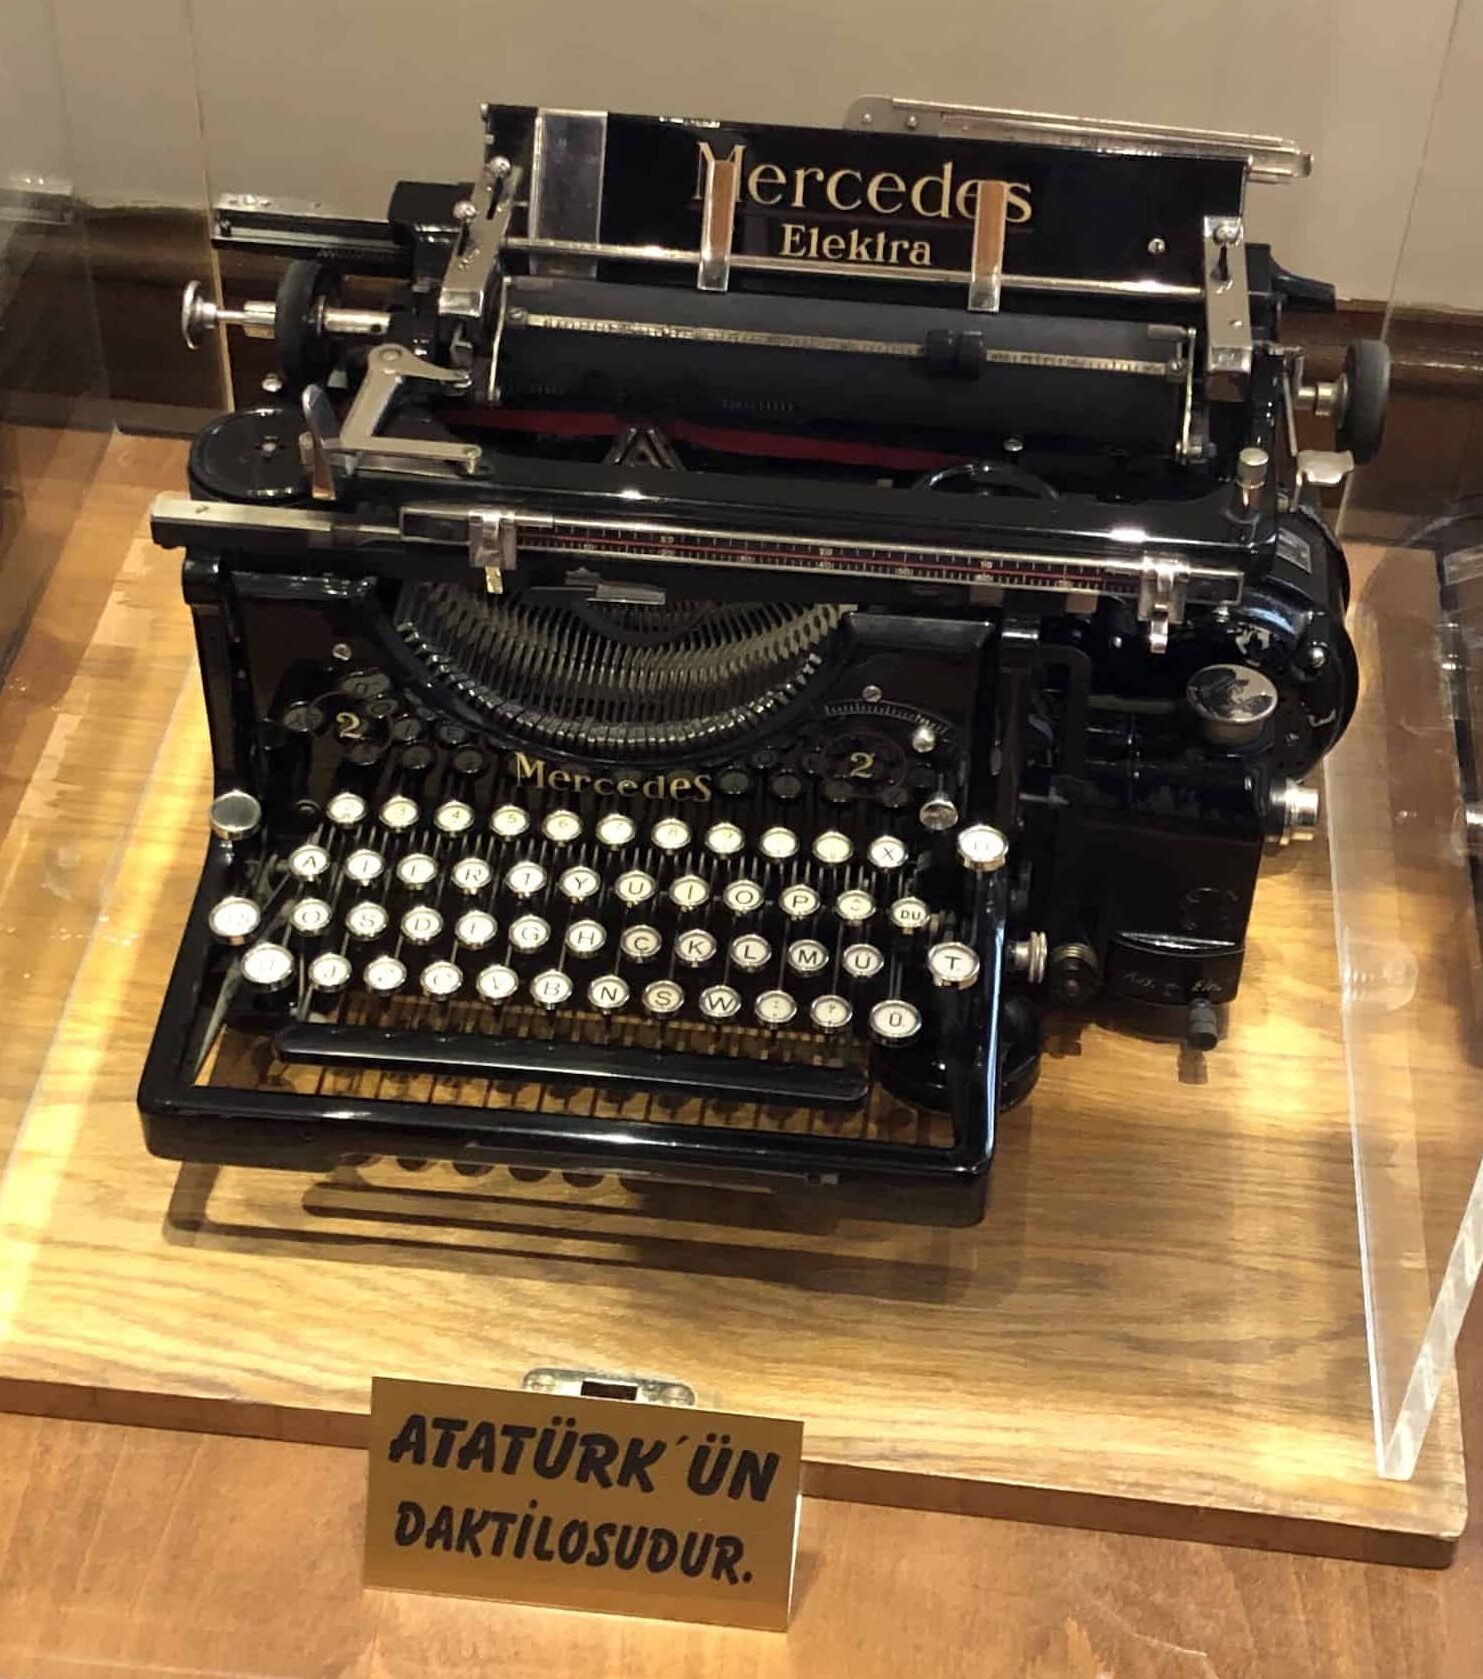 Atatürk's typewriter